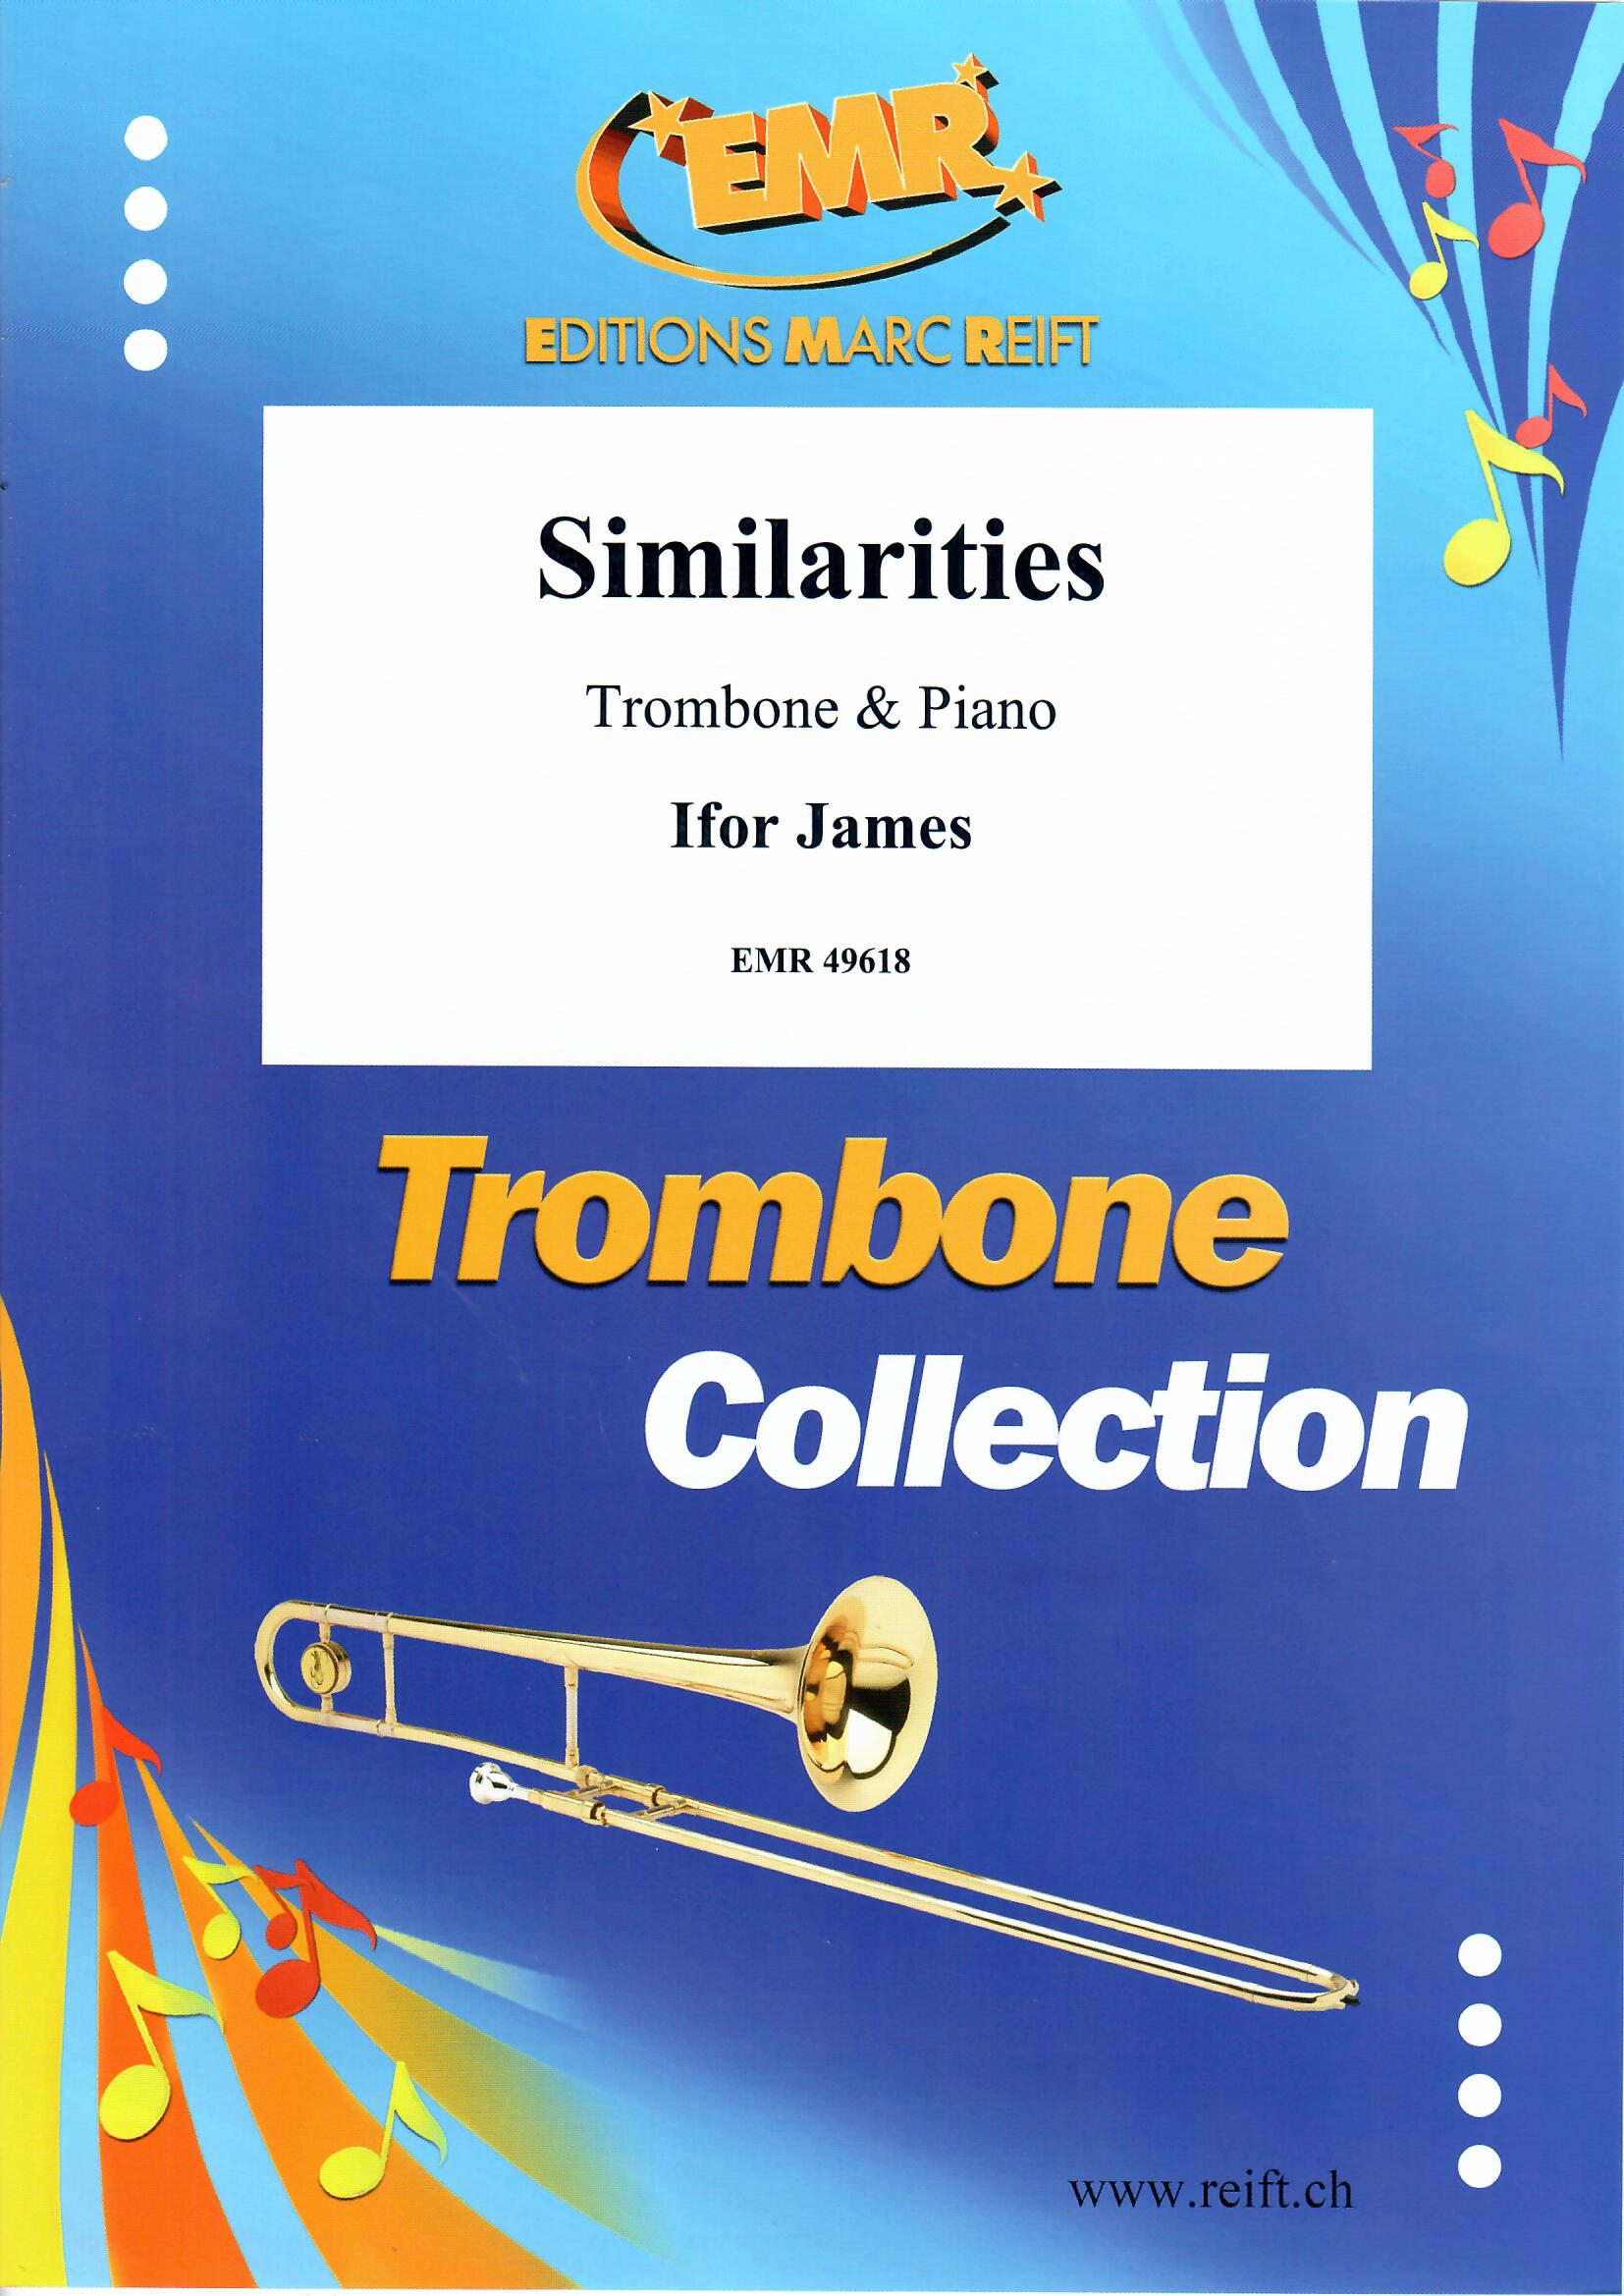 SIMILARITIES, NEW & RECENT Publications, SOLOS - Trombone